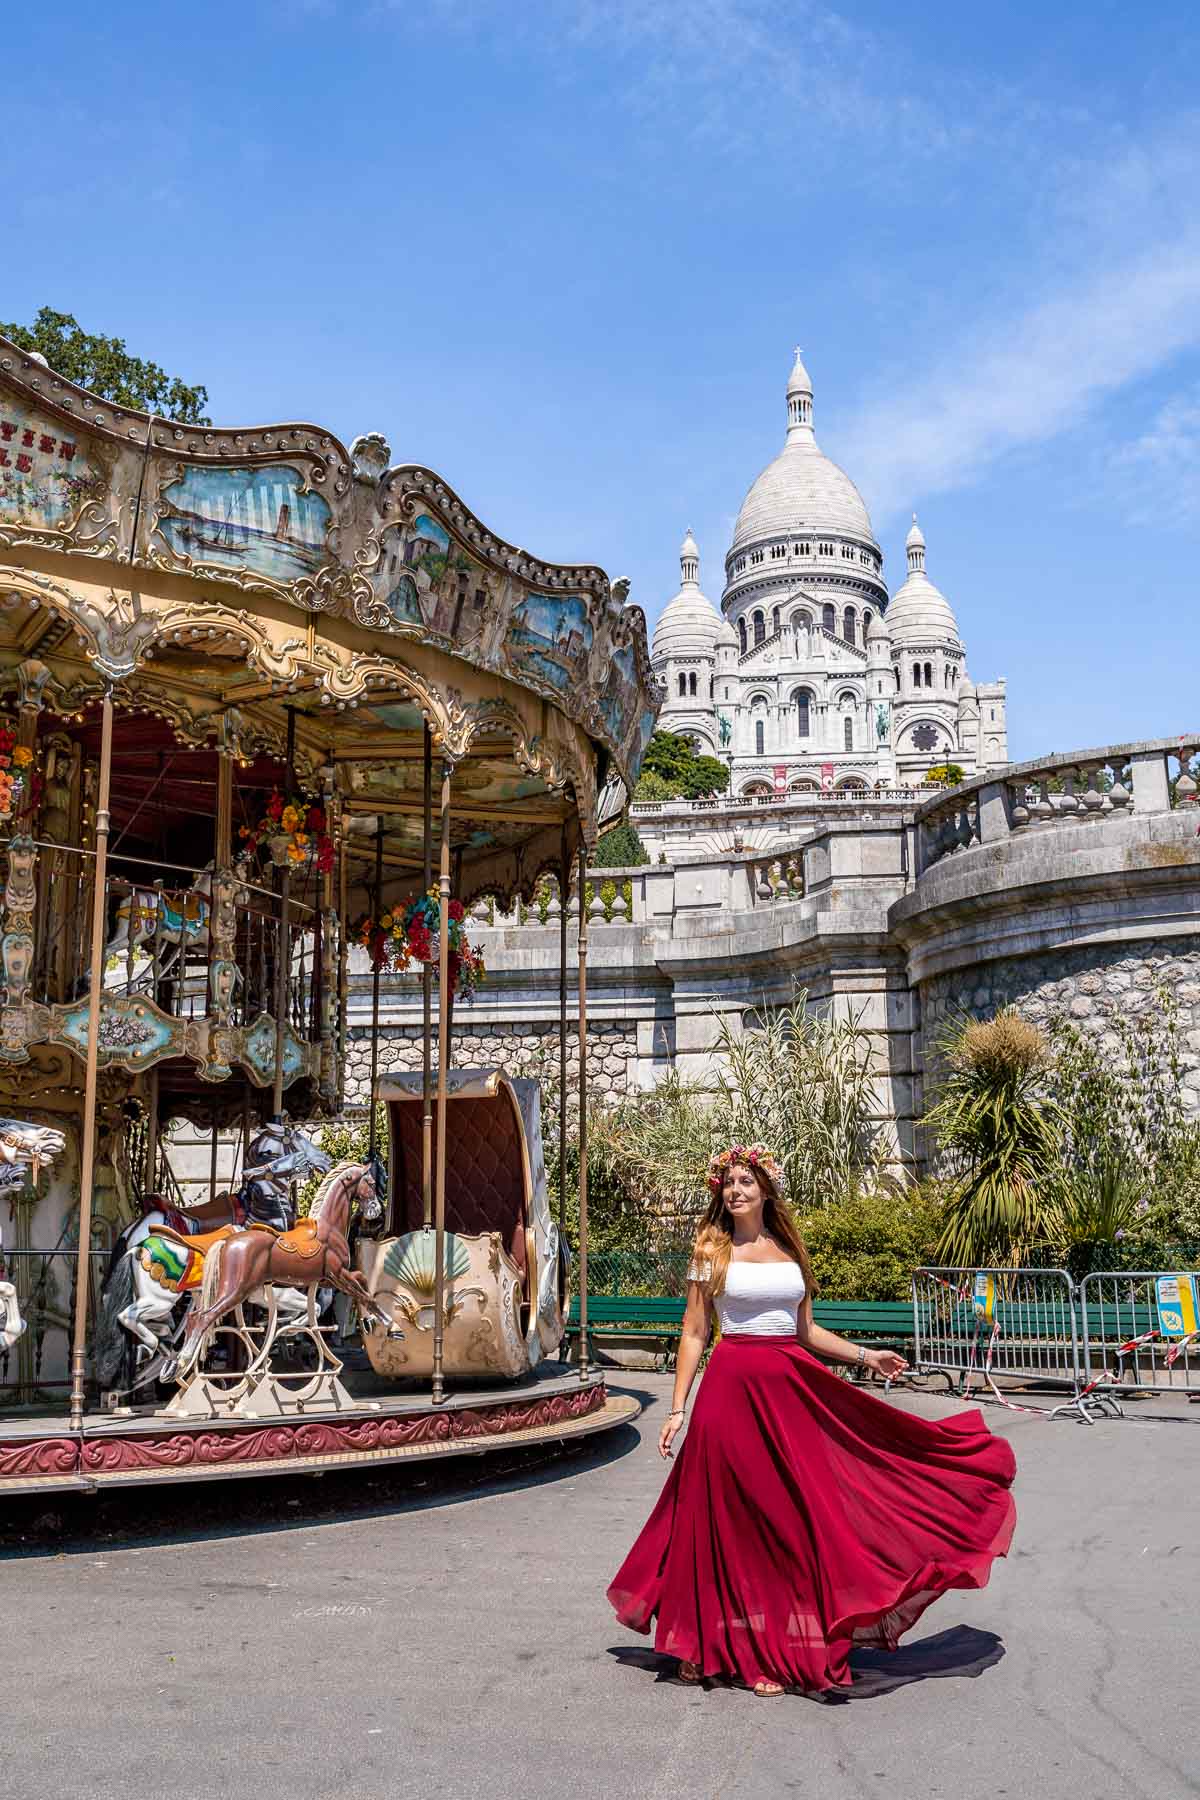 Girl in a red skirt twirling in front of Carrousel de Saint-Pierre in Montmartre, Paris